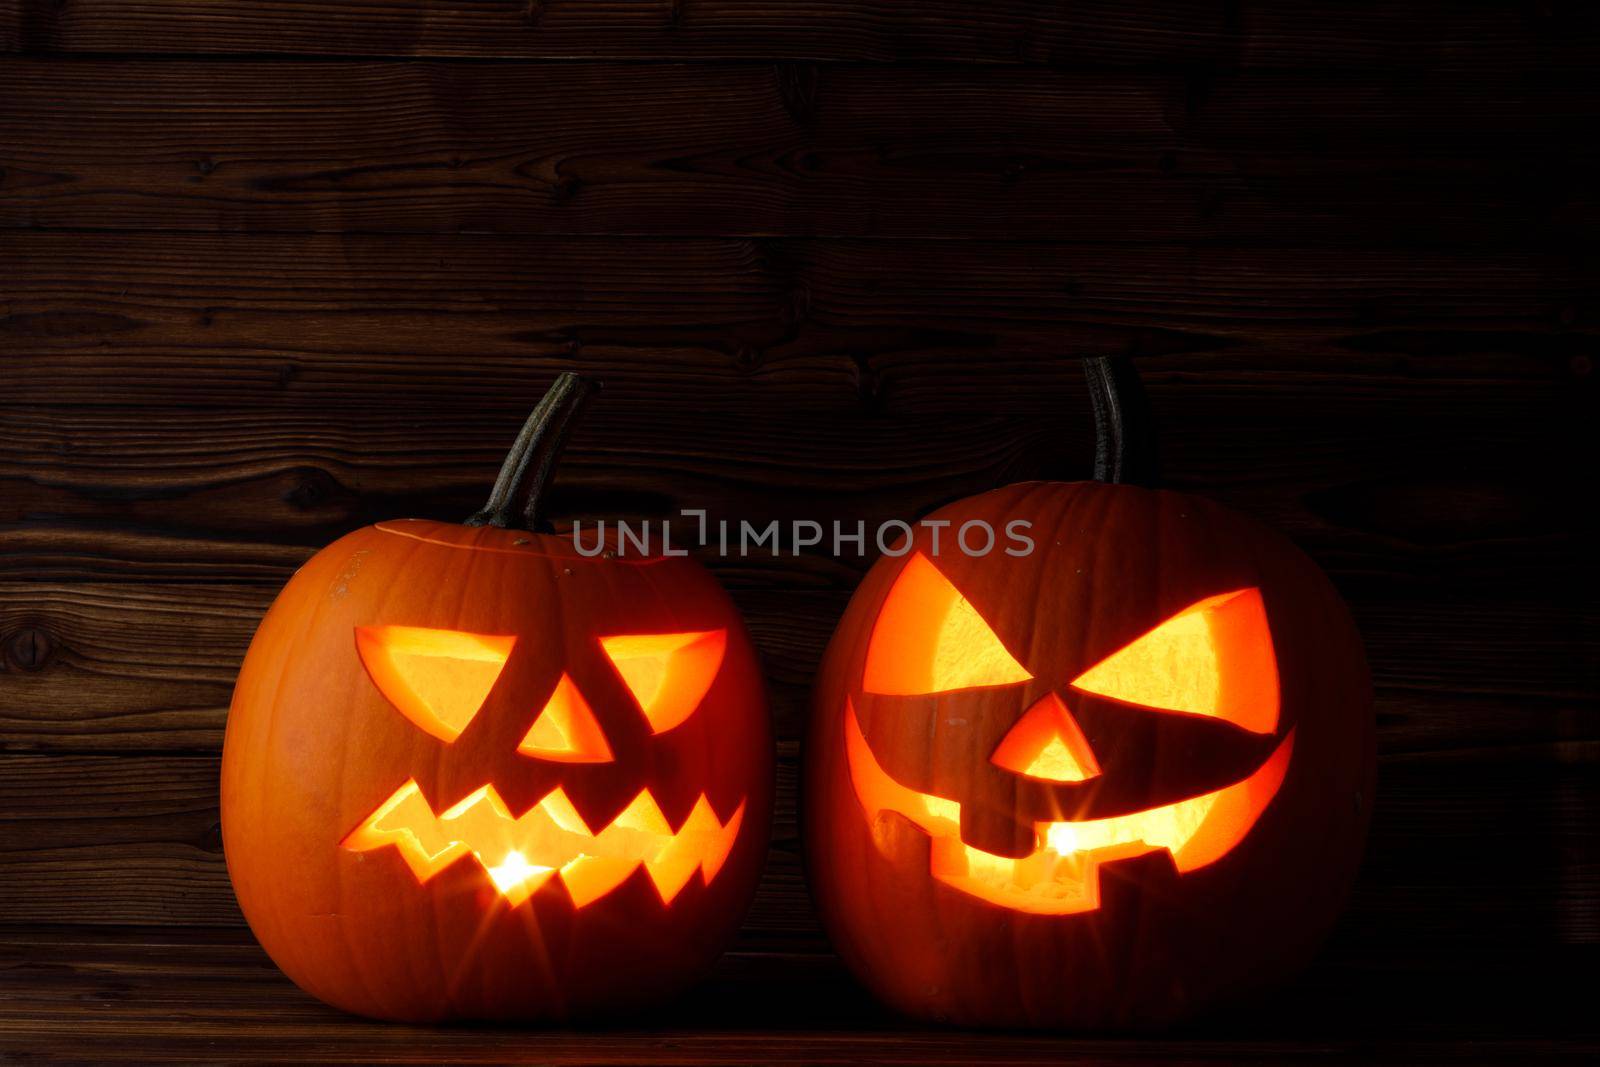 Two Halloween pumpkins by Yellowj